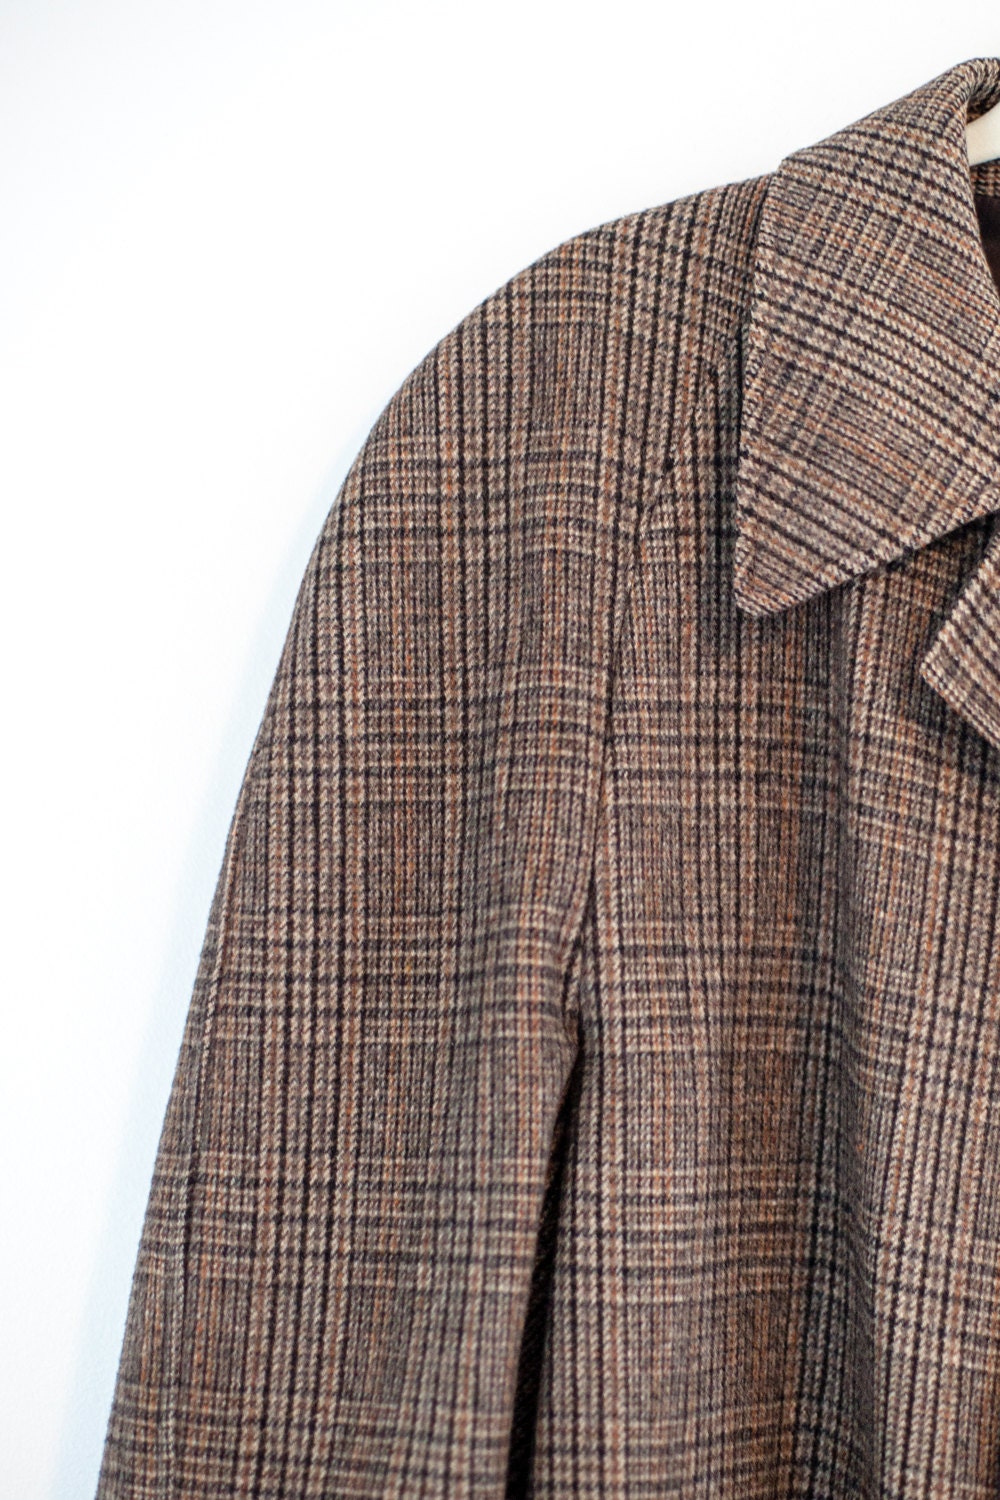 Sherlock Holmes Coat 1950s Plaid Trench MENS Vintage Coat | Etsy